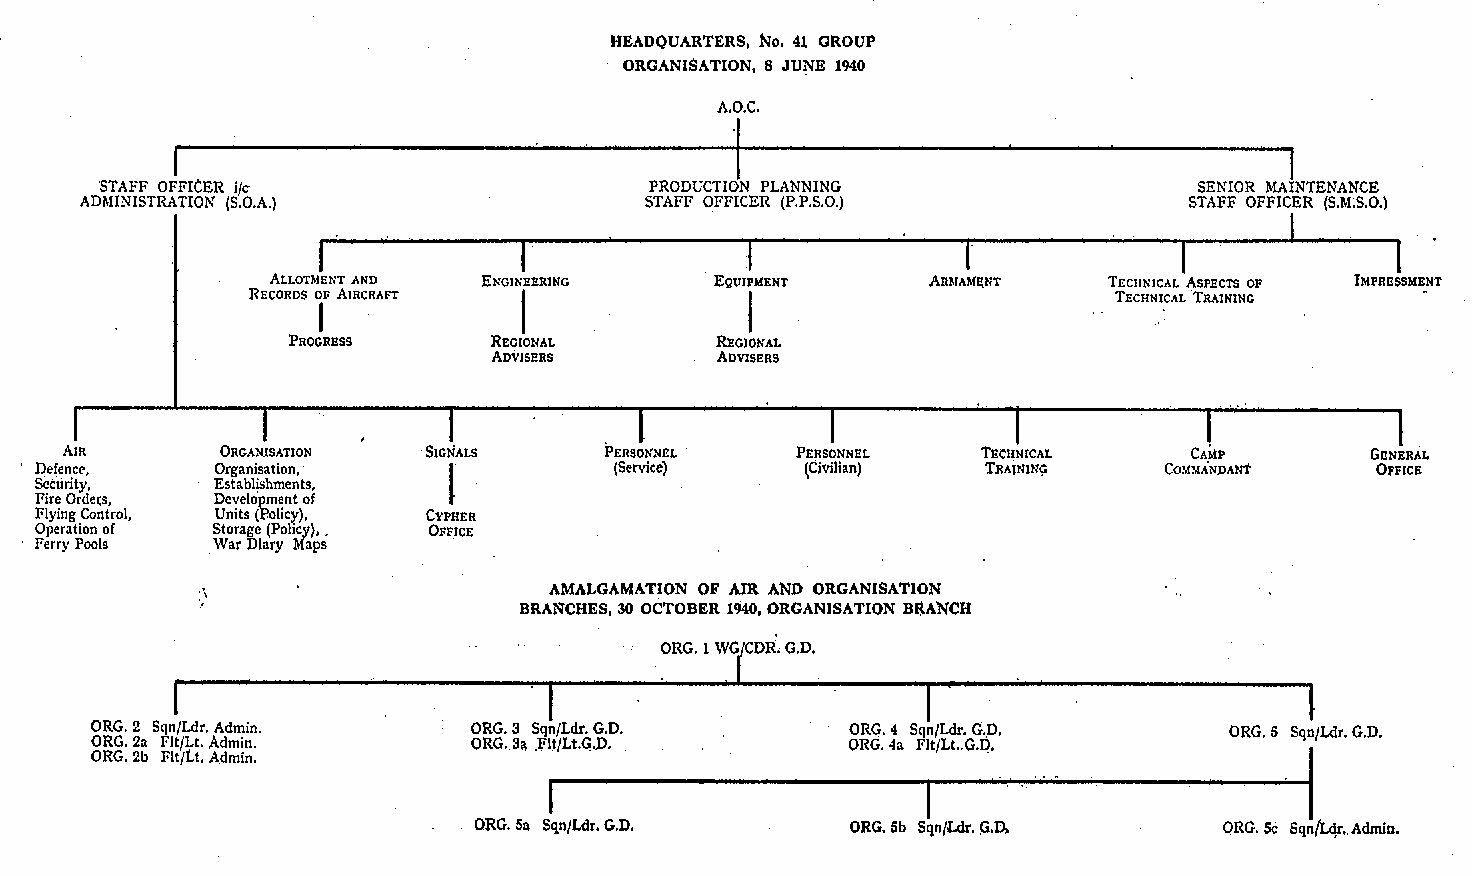 Organisation, HQ No 41 Group - June 1940